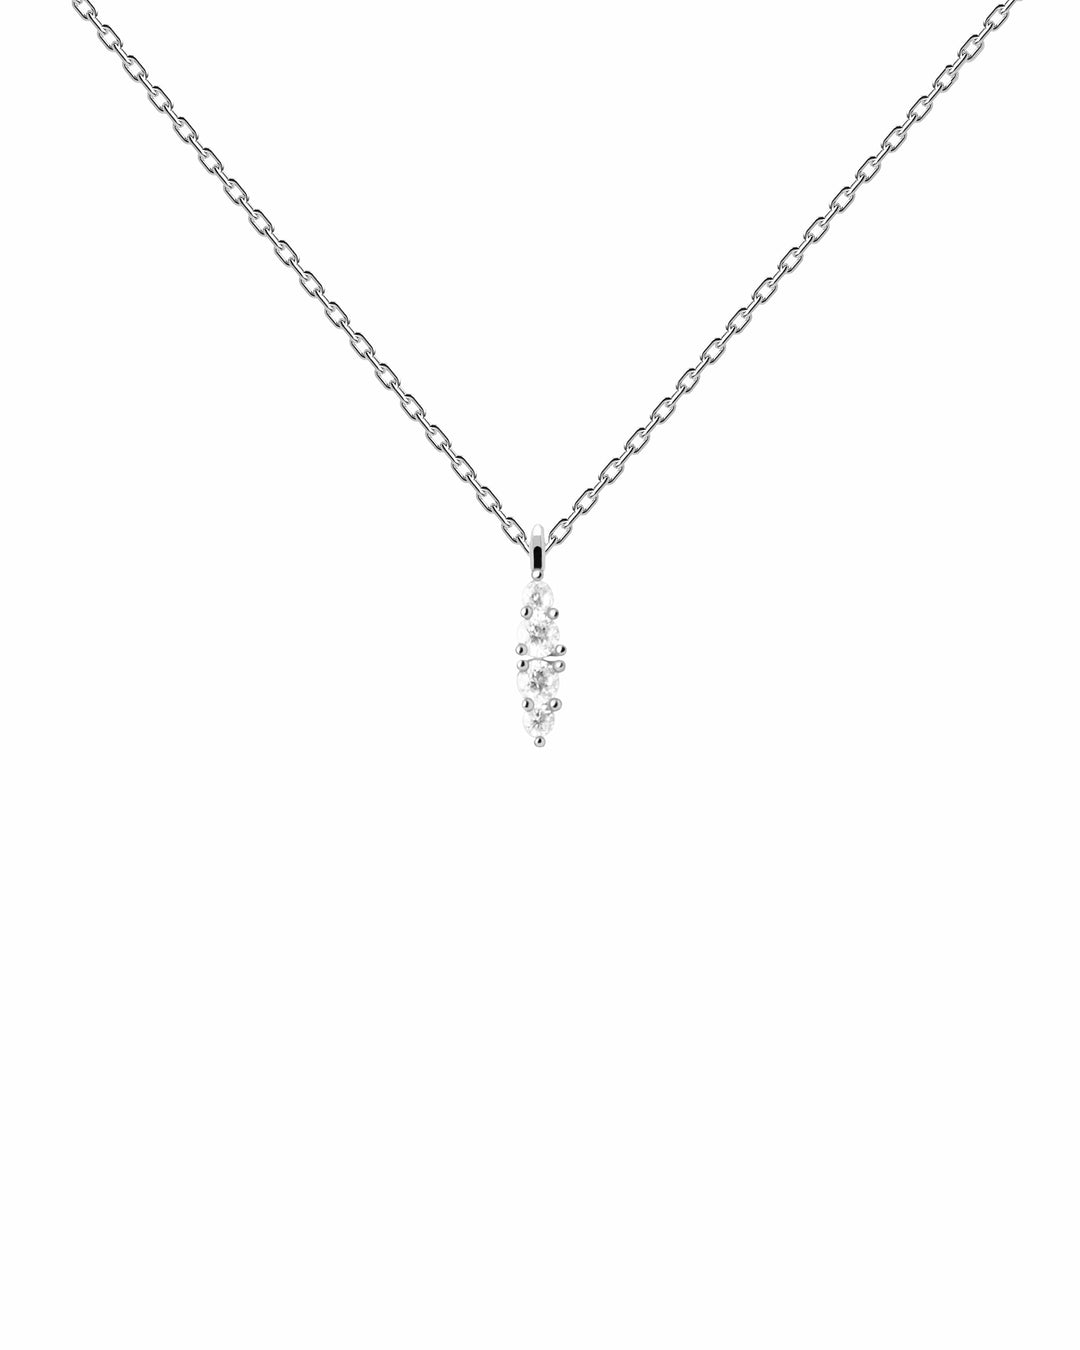 Heart & Grace Necklace PDPaola Gala Silver Necklace Brand